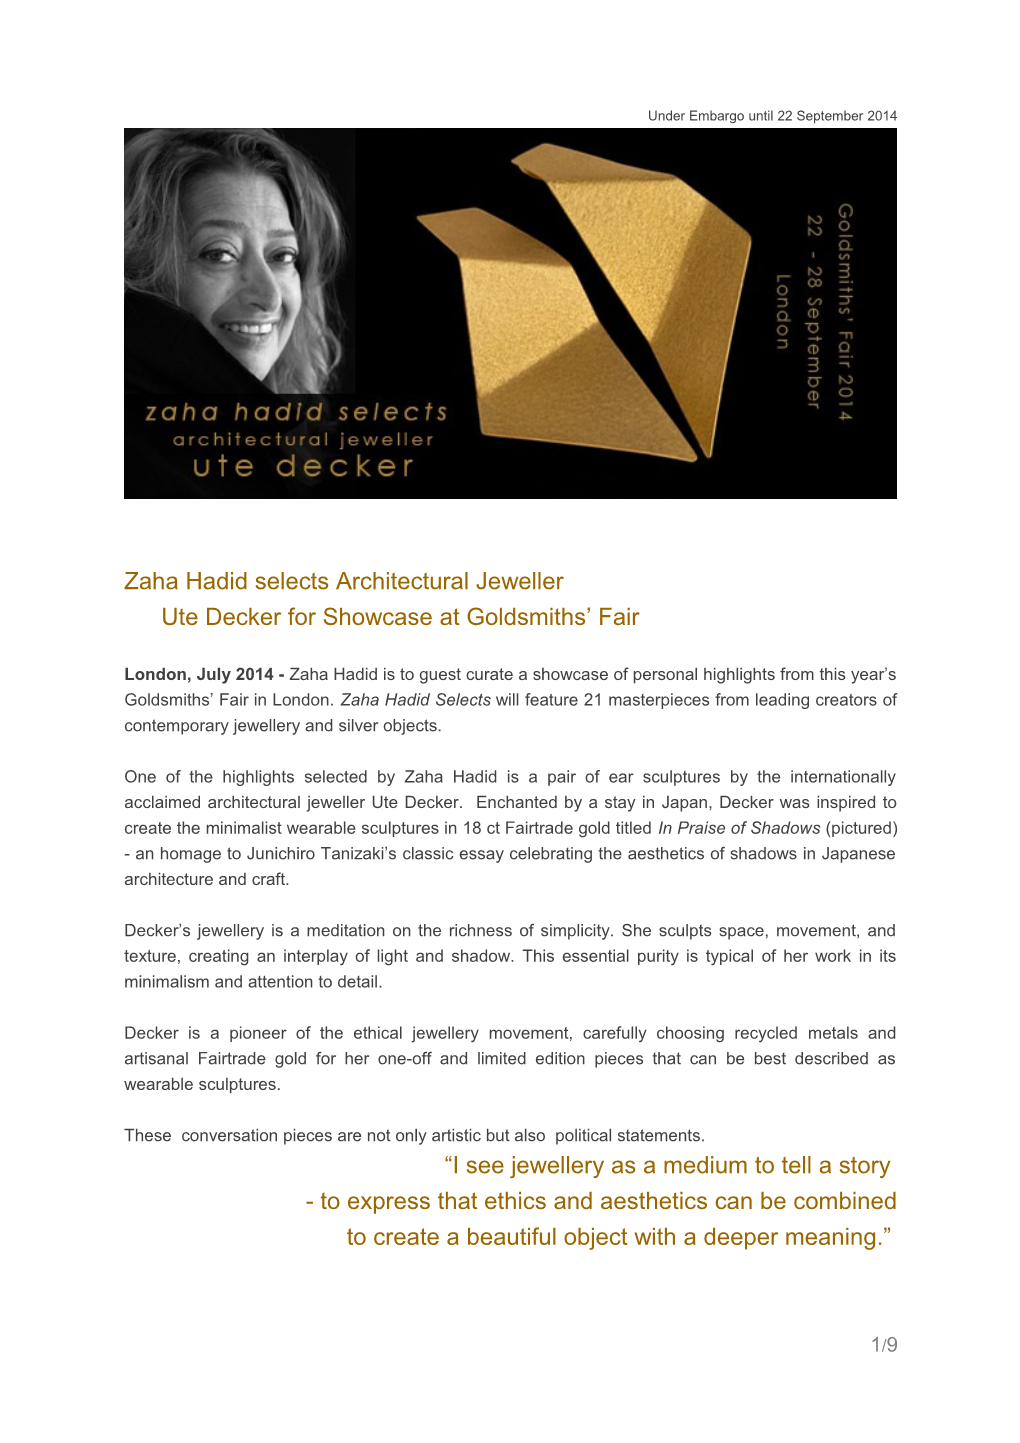 Zaha Hadid Selects Architectural Jeweller Ute Decker Forshowcase at Goldsmiths Fair